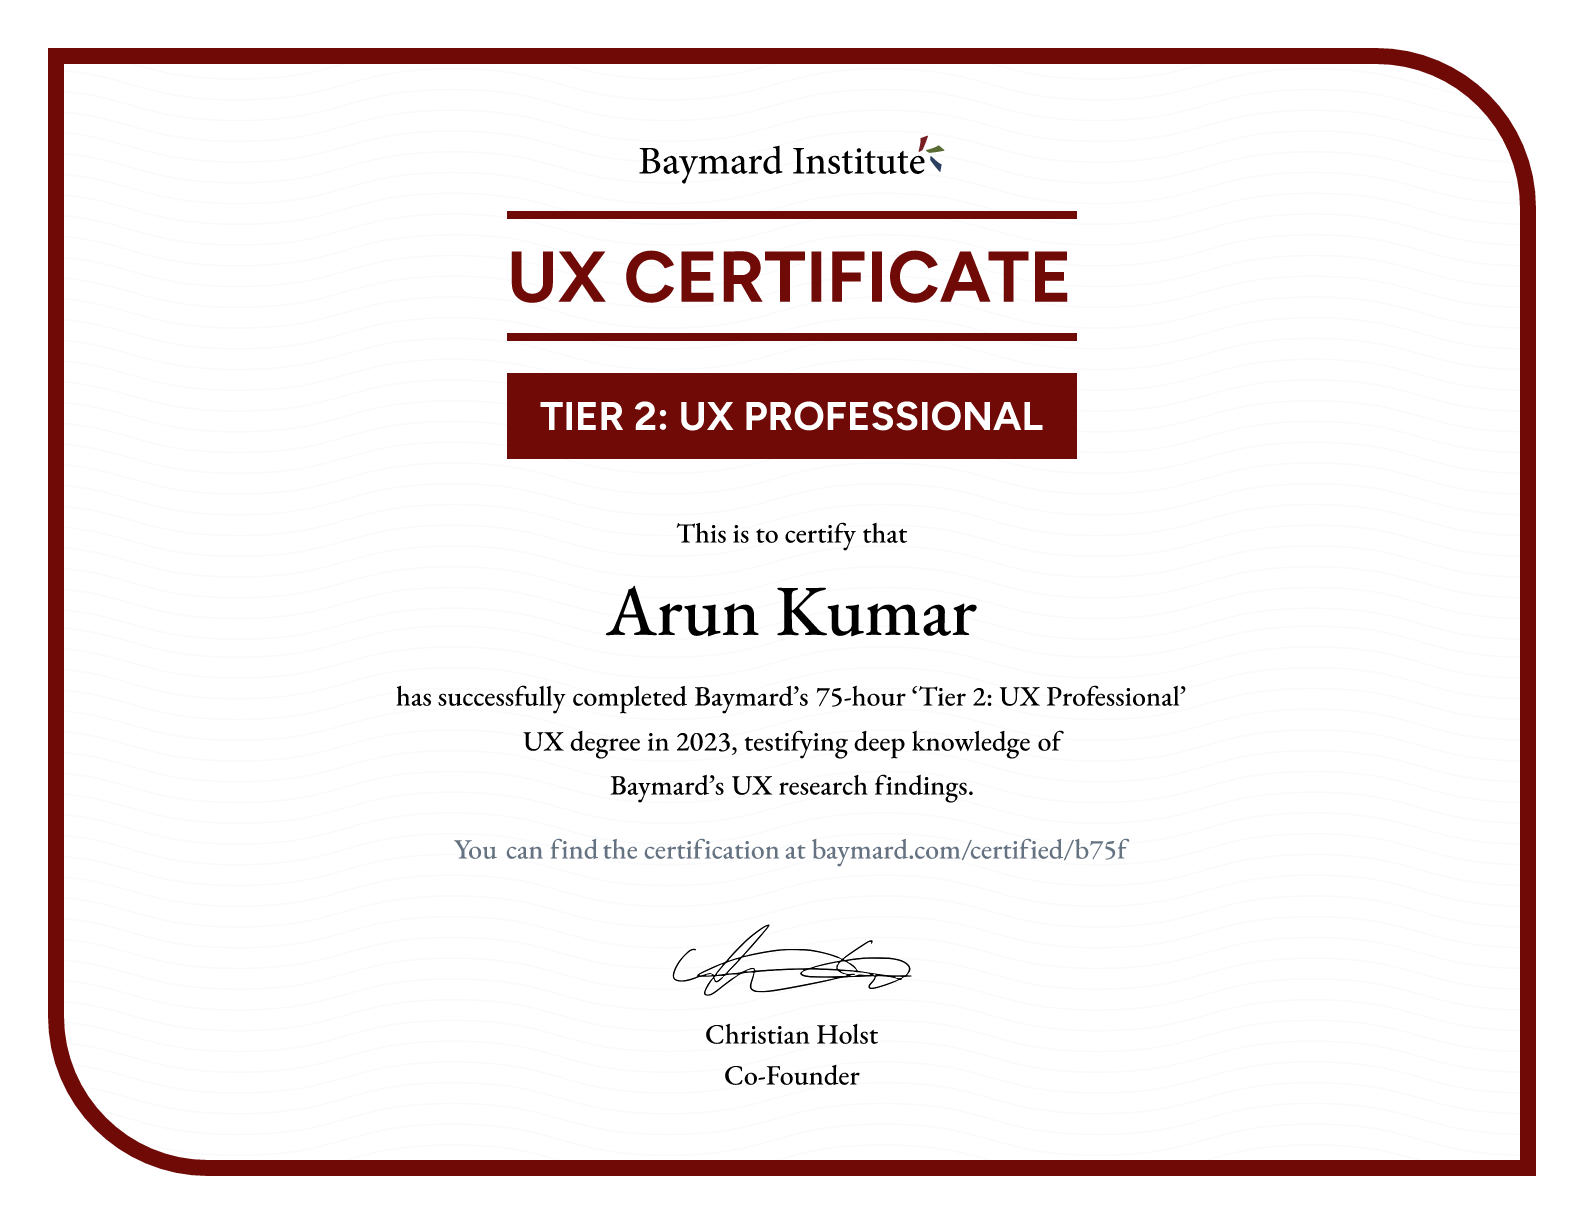 Arun Kumar’s certificate